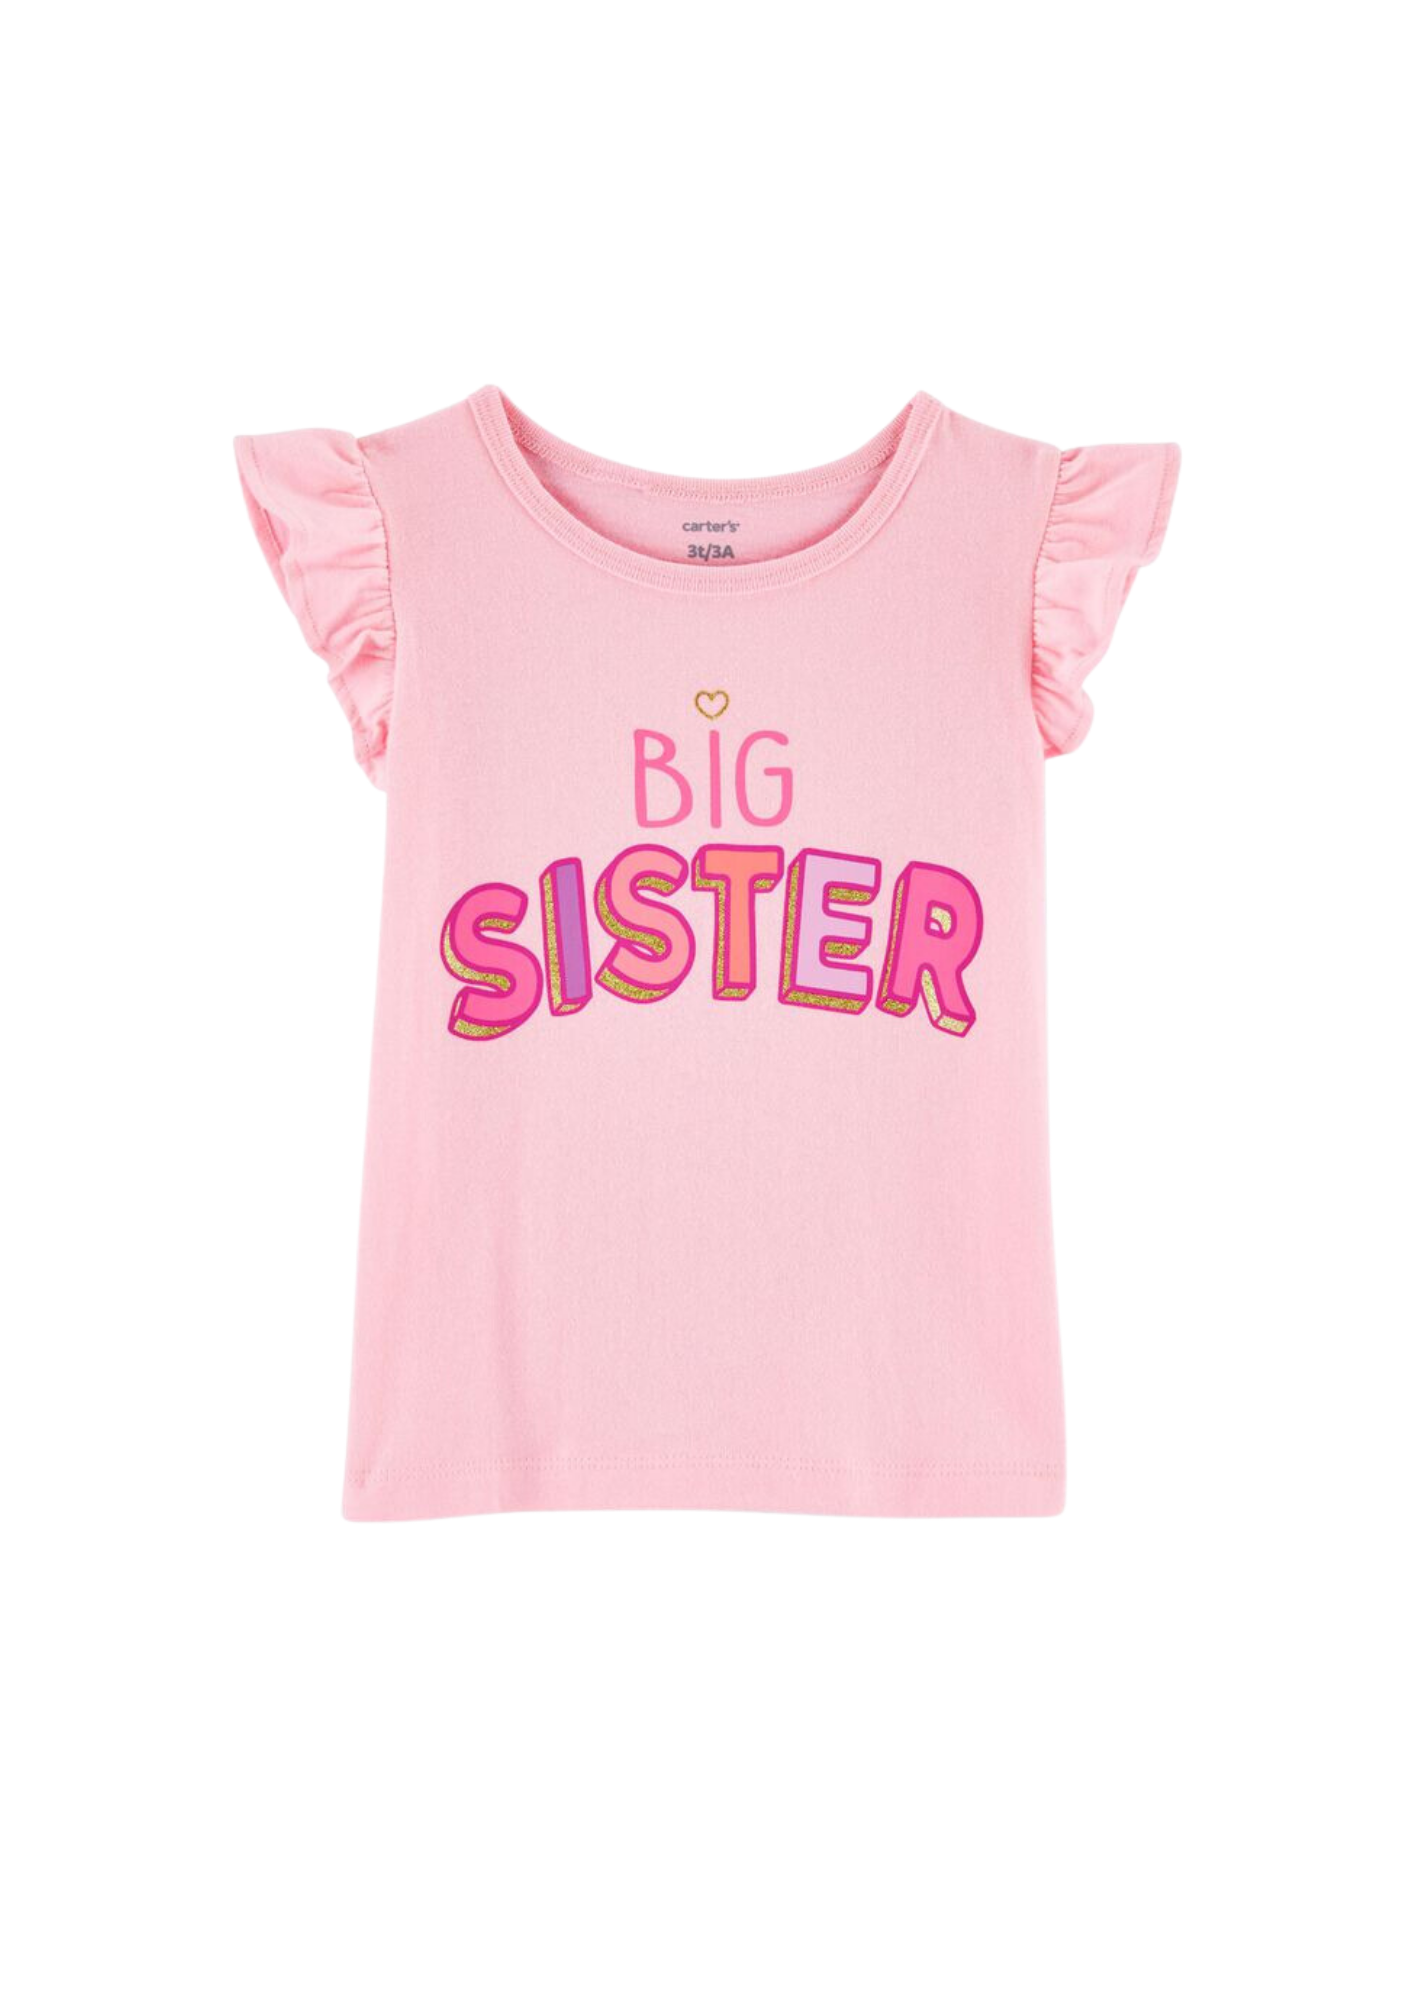 Carter's - Blusa básica color rosado "Big Sister"